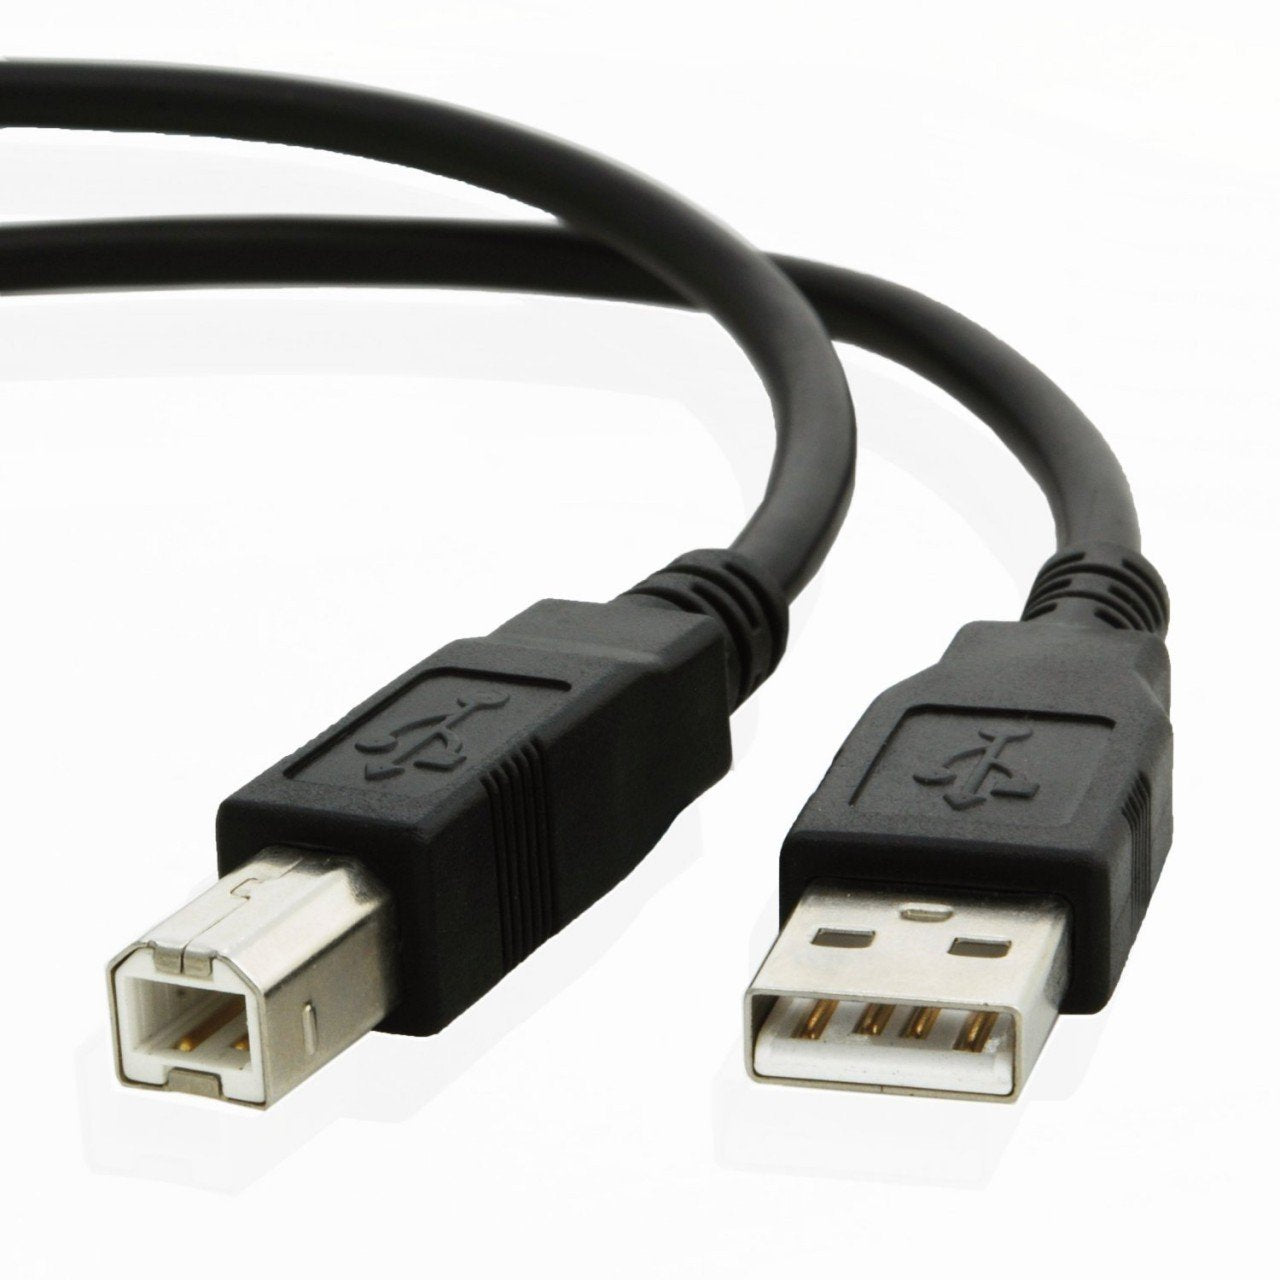 USB cable for Audio Technica ATR-2500